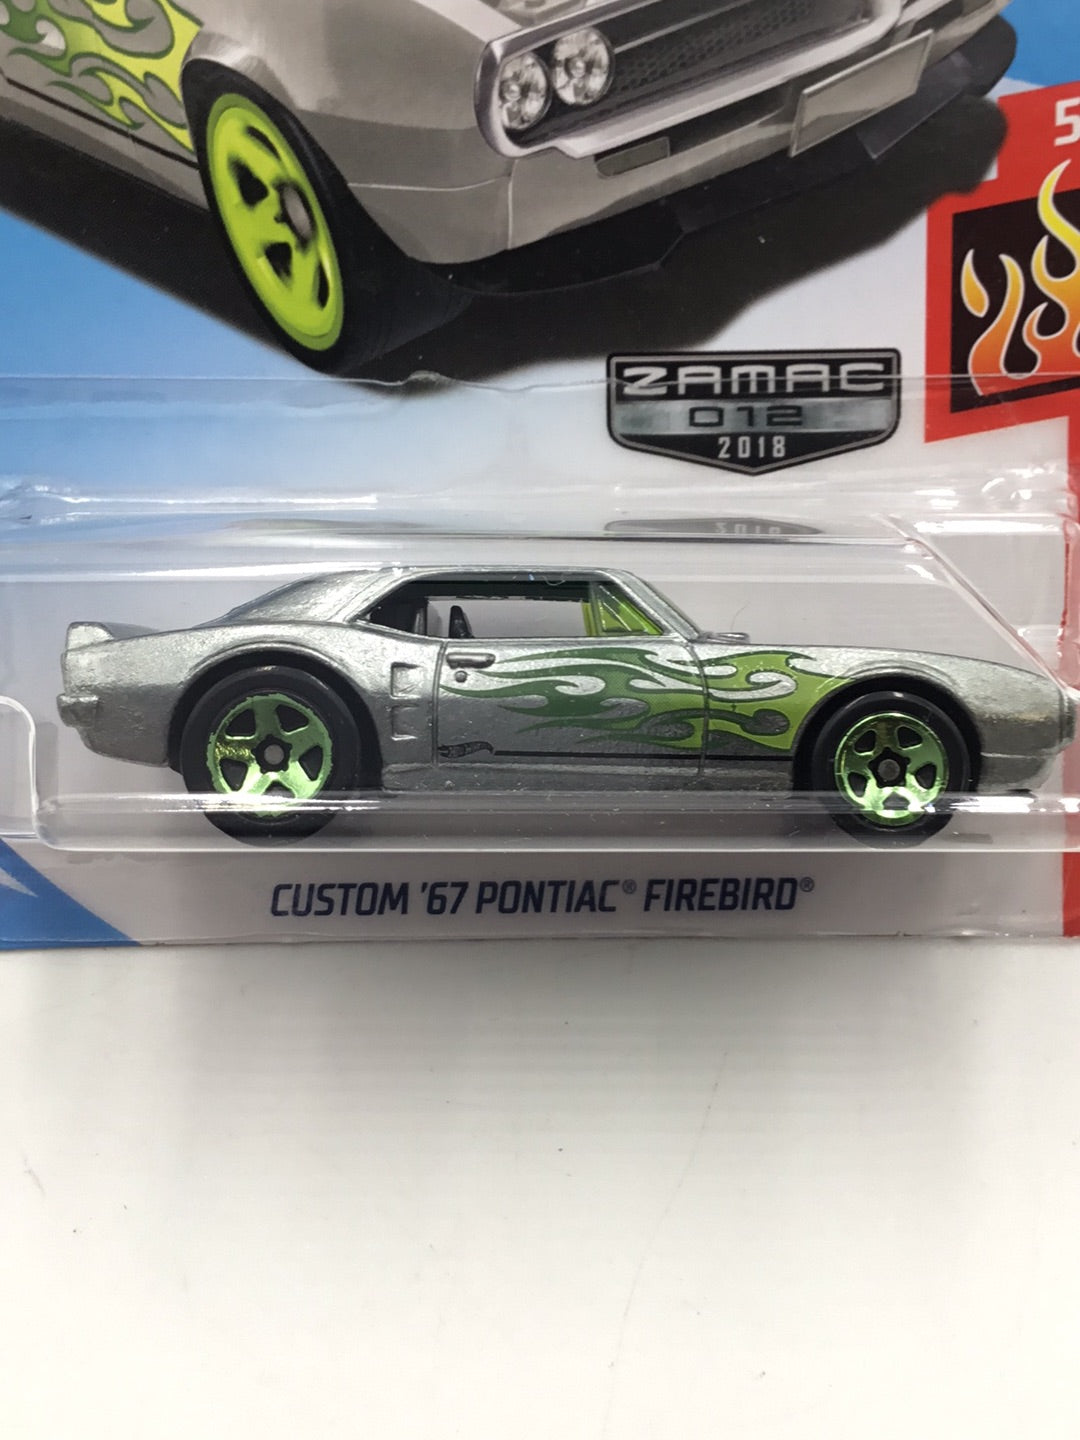 2018 Hot wheels Zamac #12 Custom 67 Pontiac Firebird Factory Sealed sticker